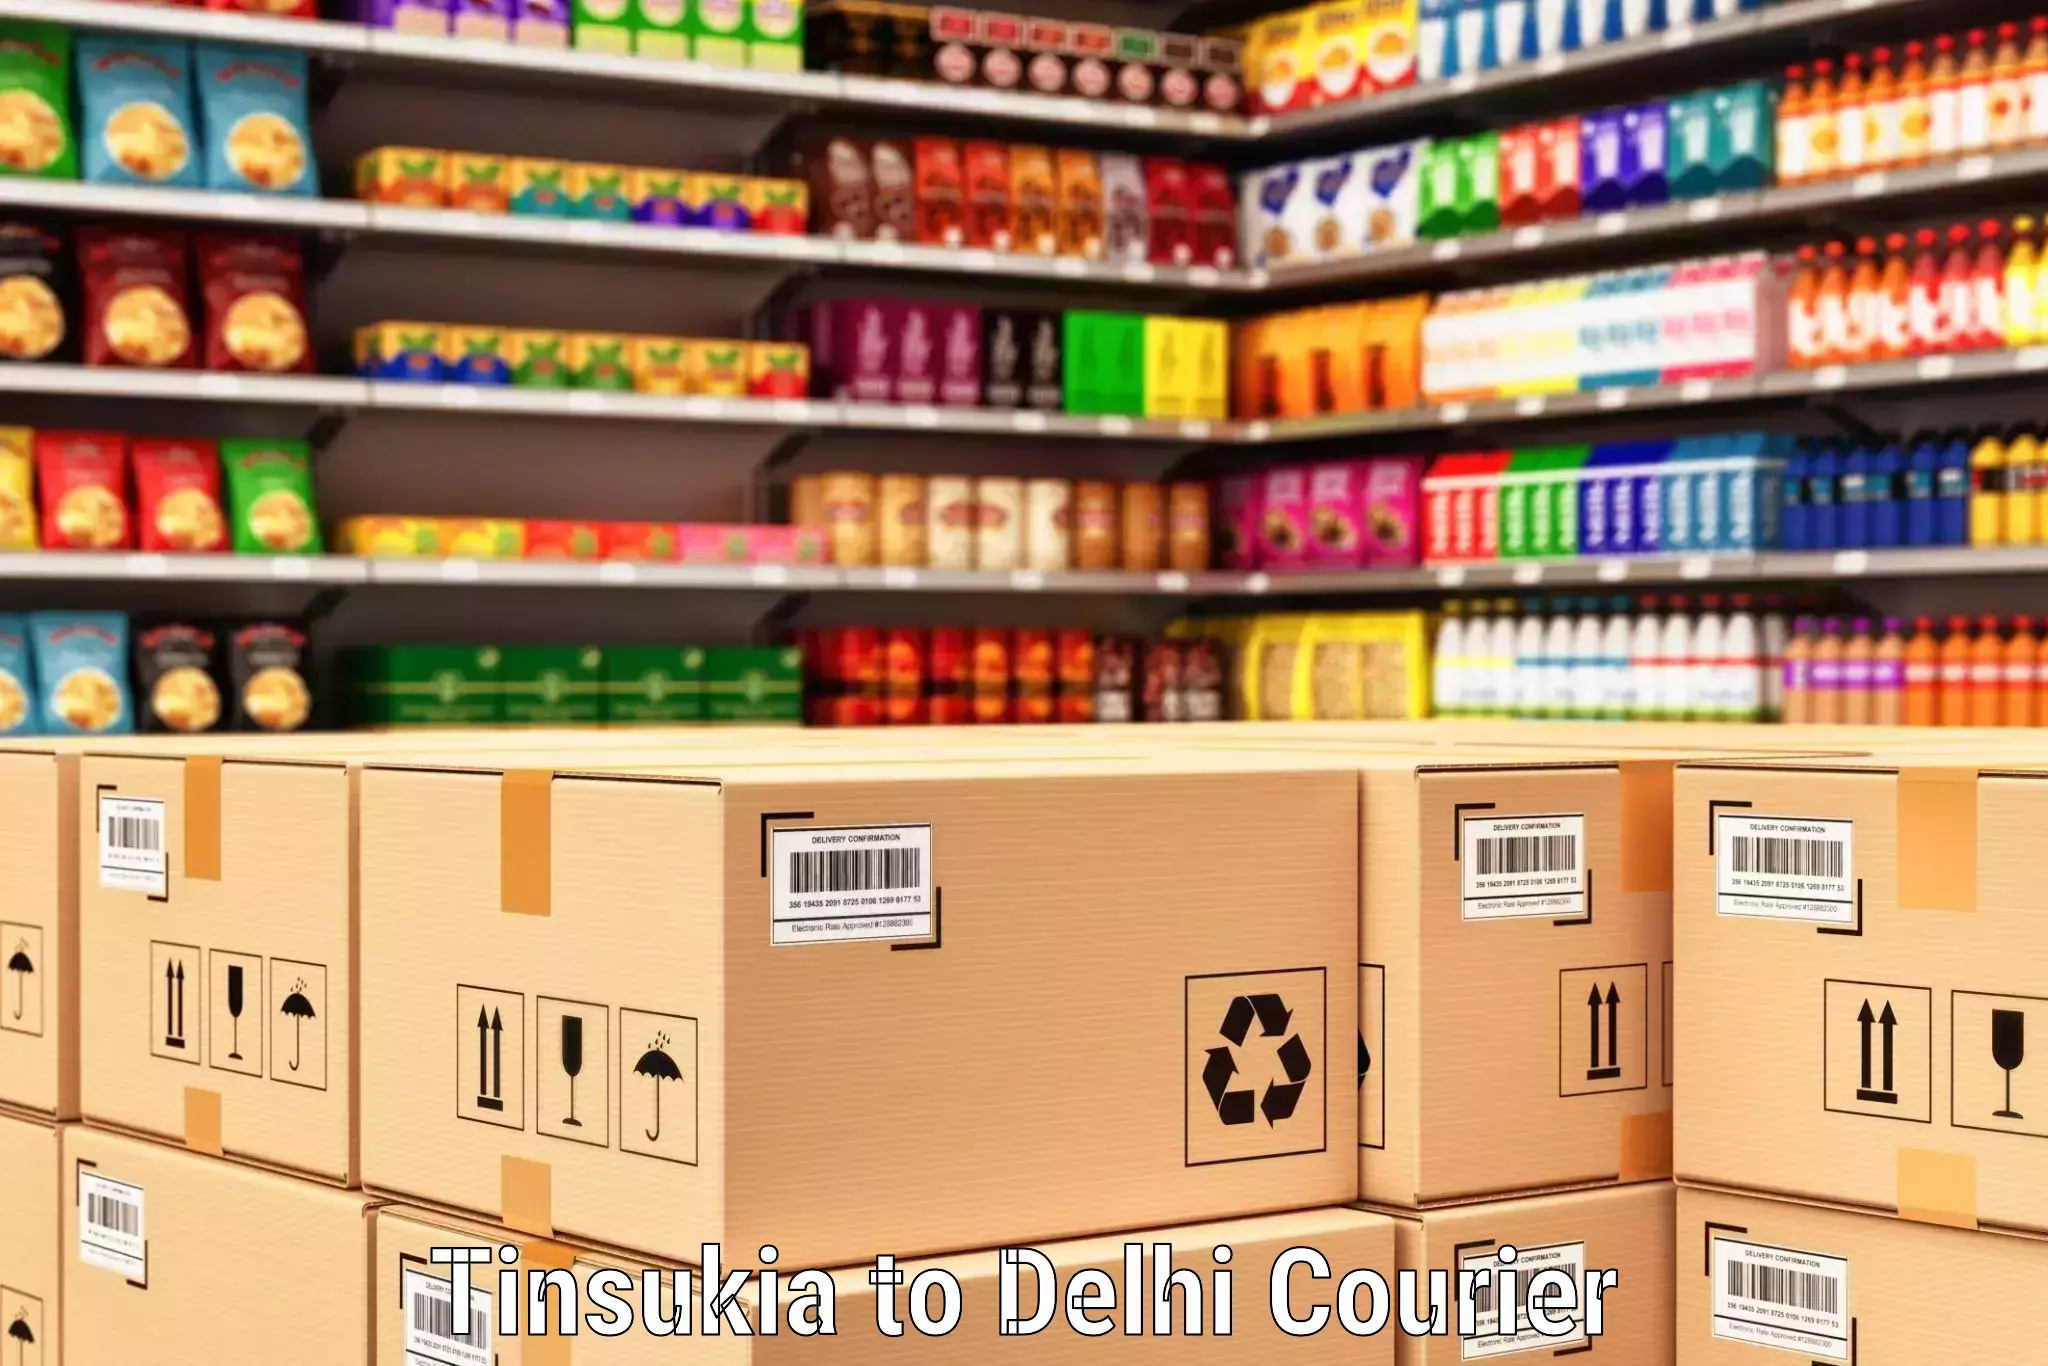 Global logistics network Tinsukia to Delhi